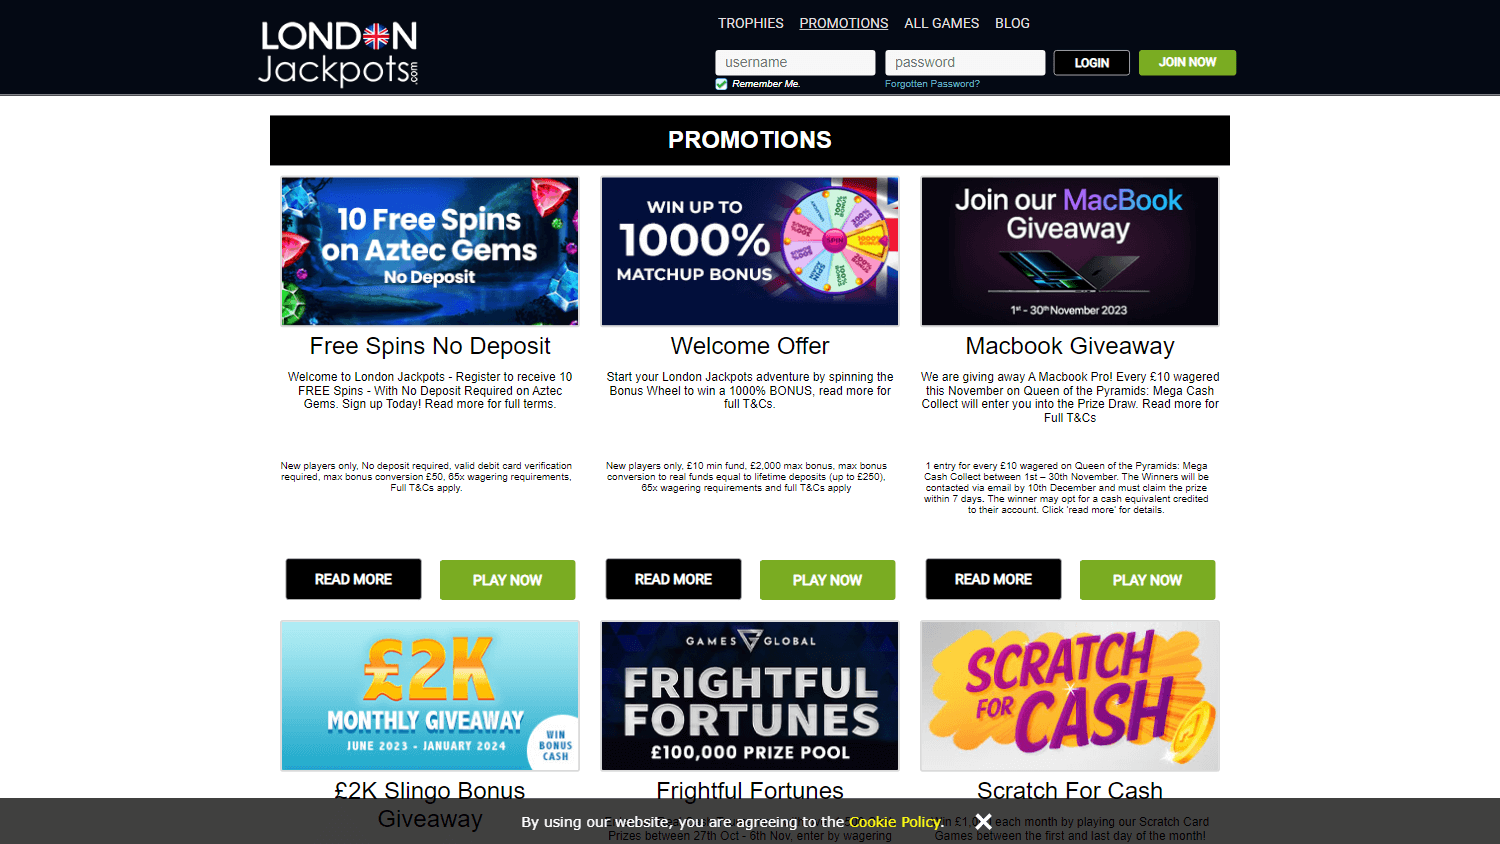 london_jackpots_casino_promotions_desktop